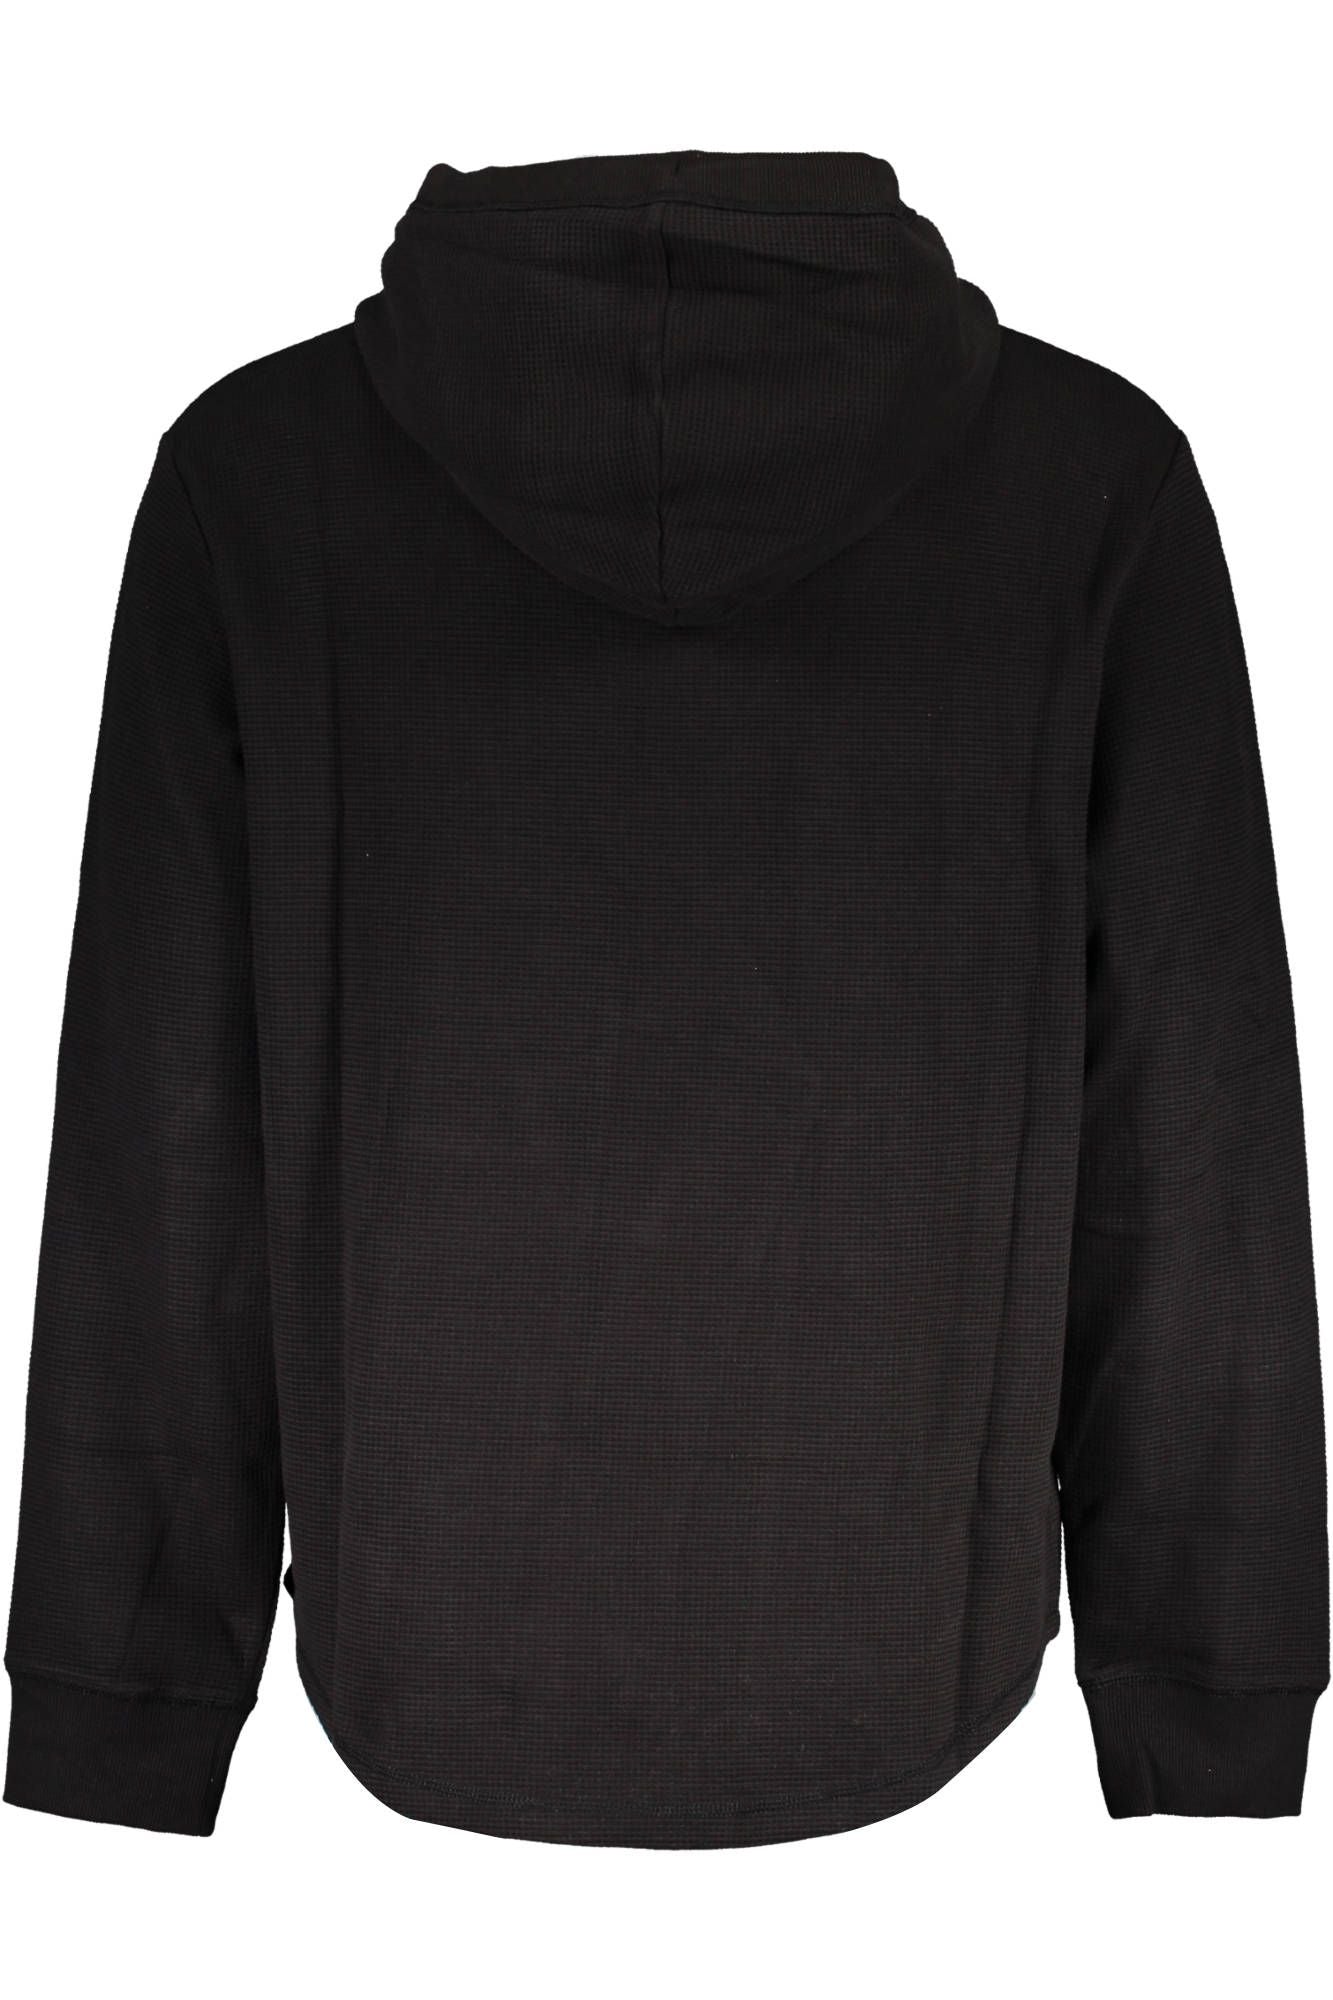 Sleek Black Cotton Hooded Sweatshirt